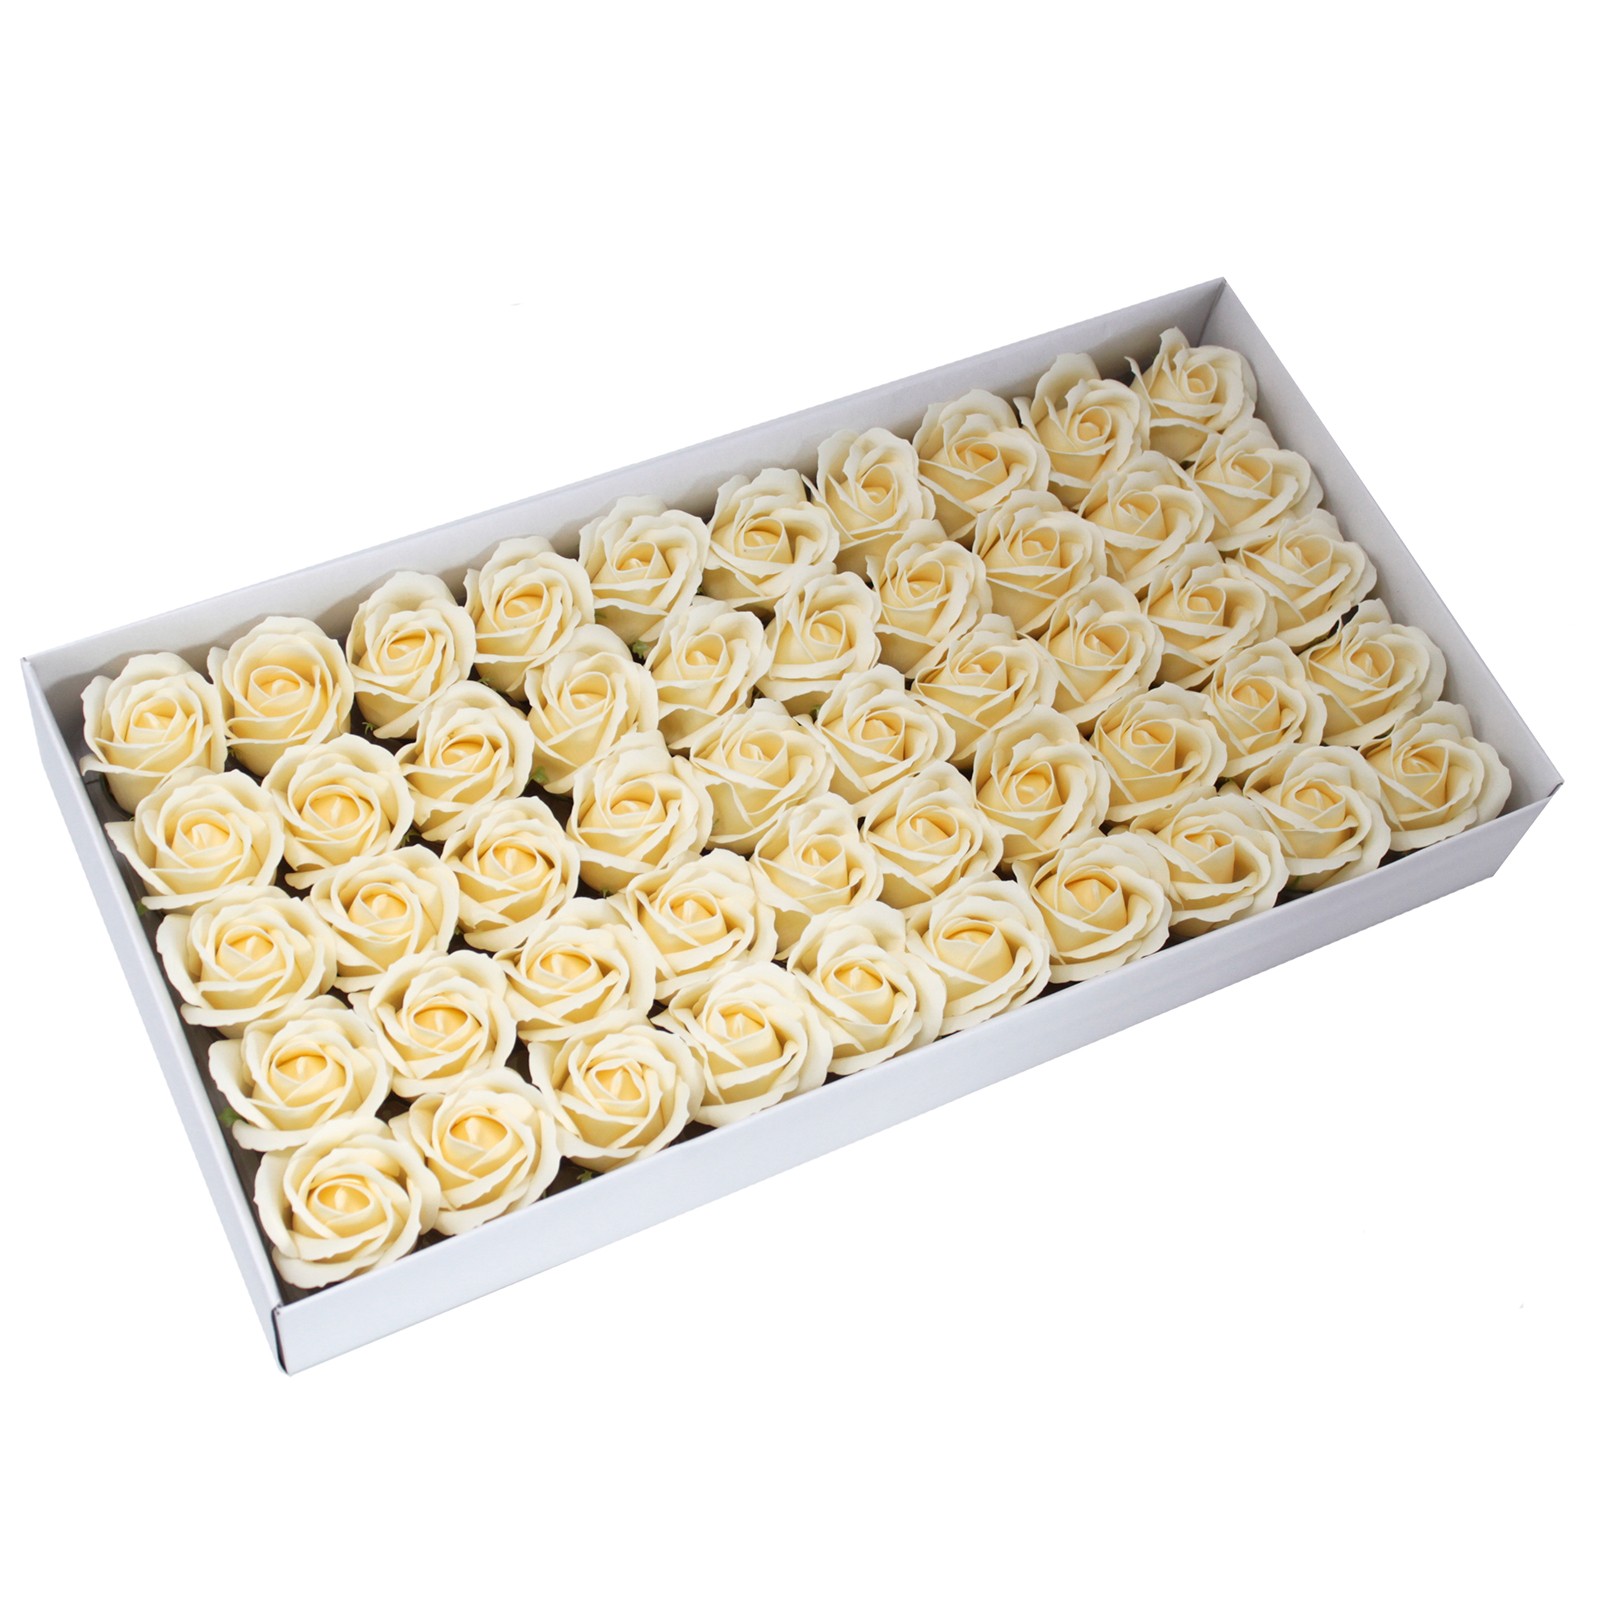 10 x Craft Soap Flowers - Med Rose - Ivory